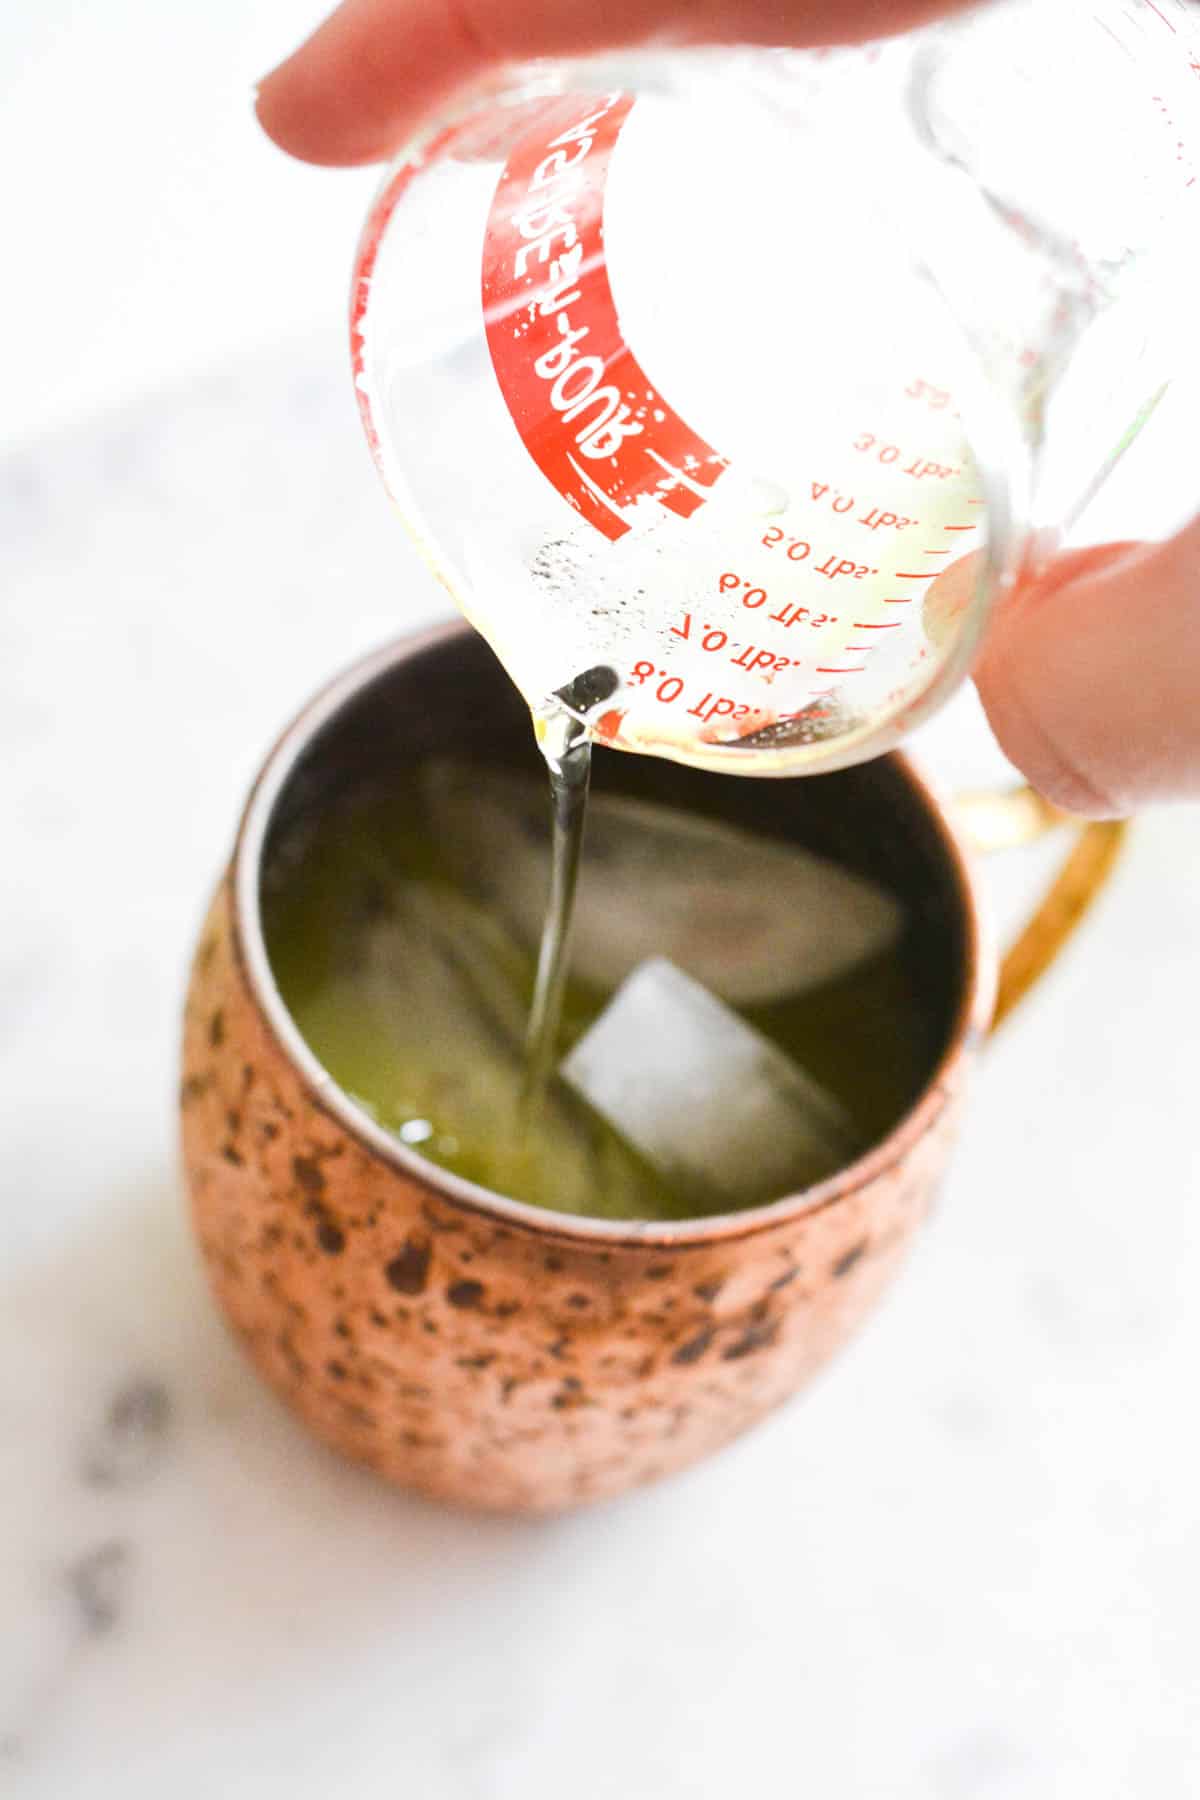 Adding Rose's Lime Juice to a copper Mule mug.